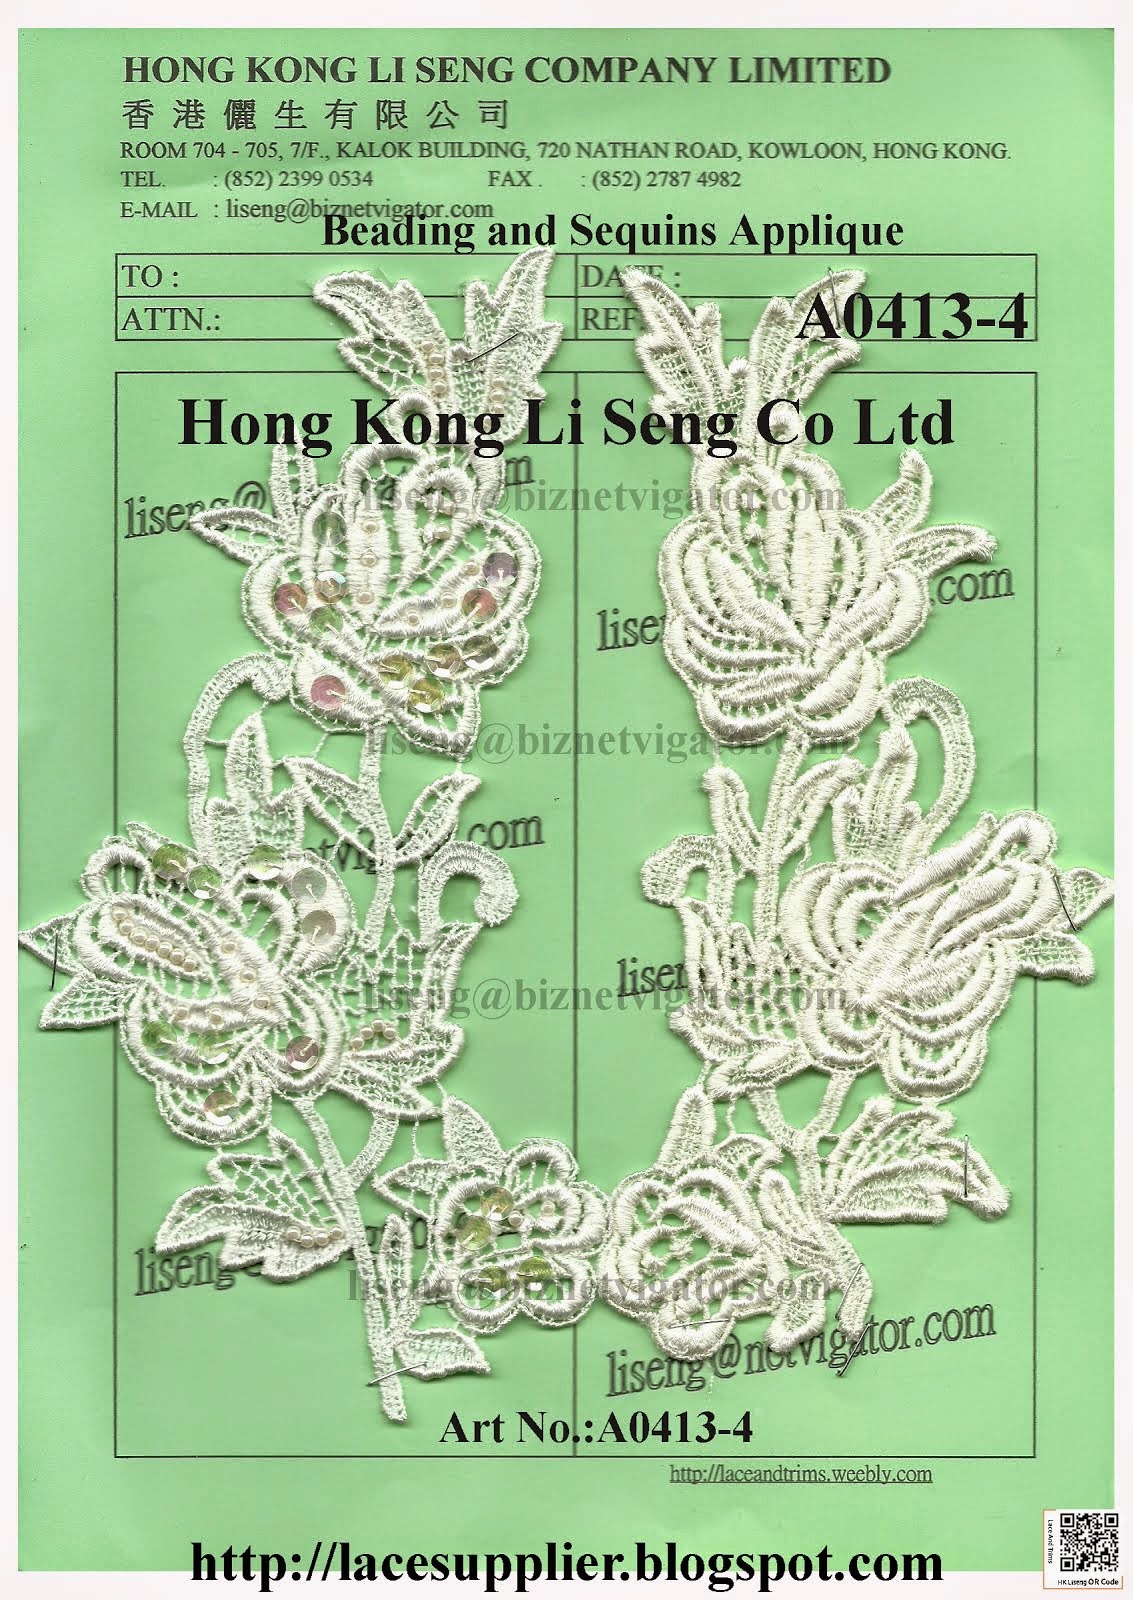 Beading and Sequins Applique Manufacturer Wholesale Supplier - Hong Kong Li Seng Co Ltd